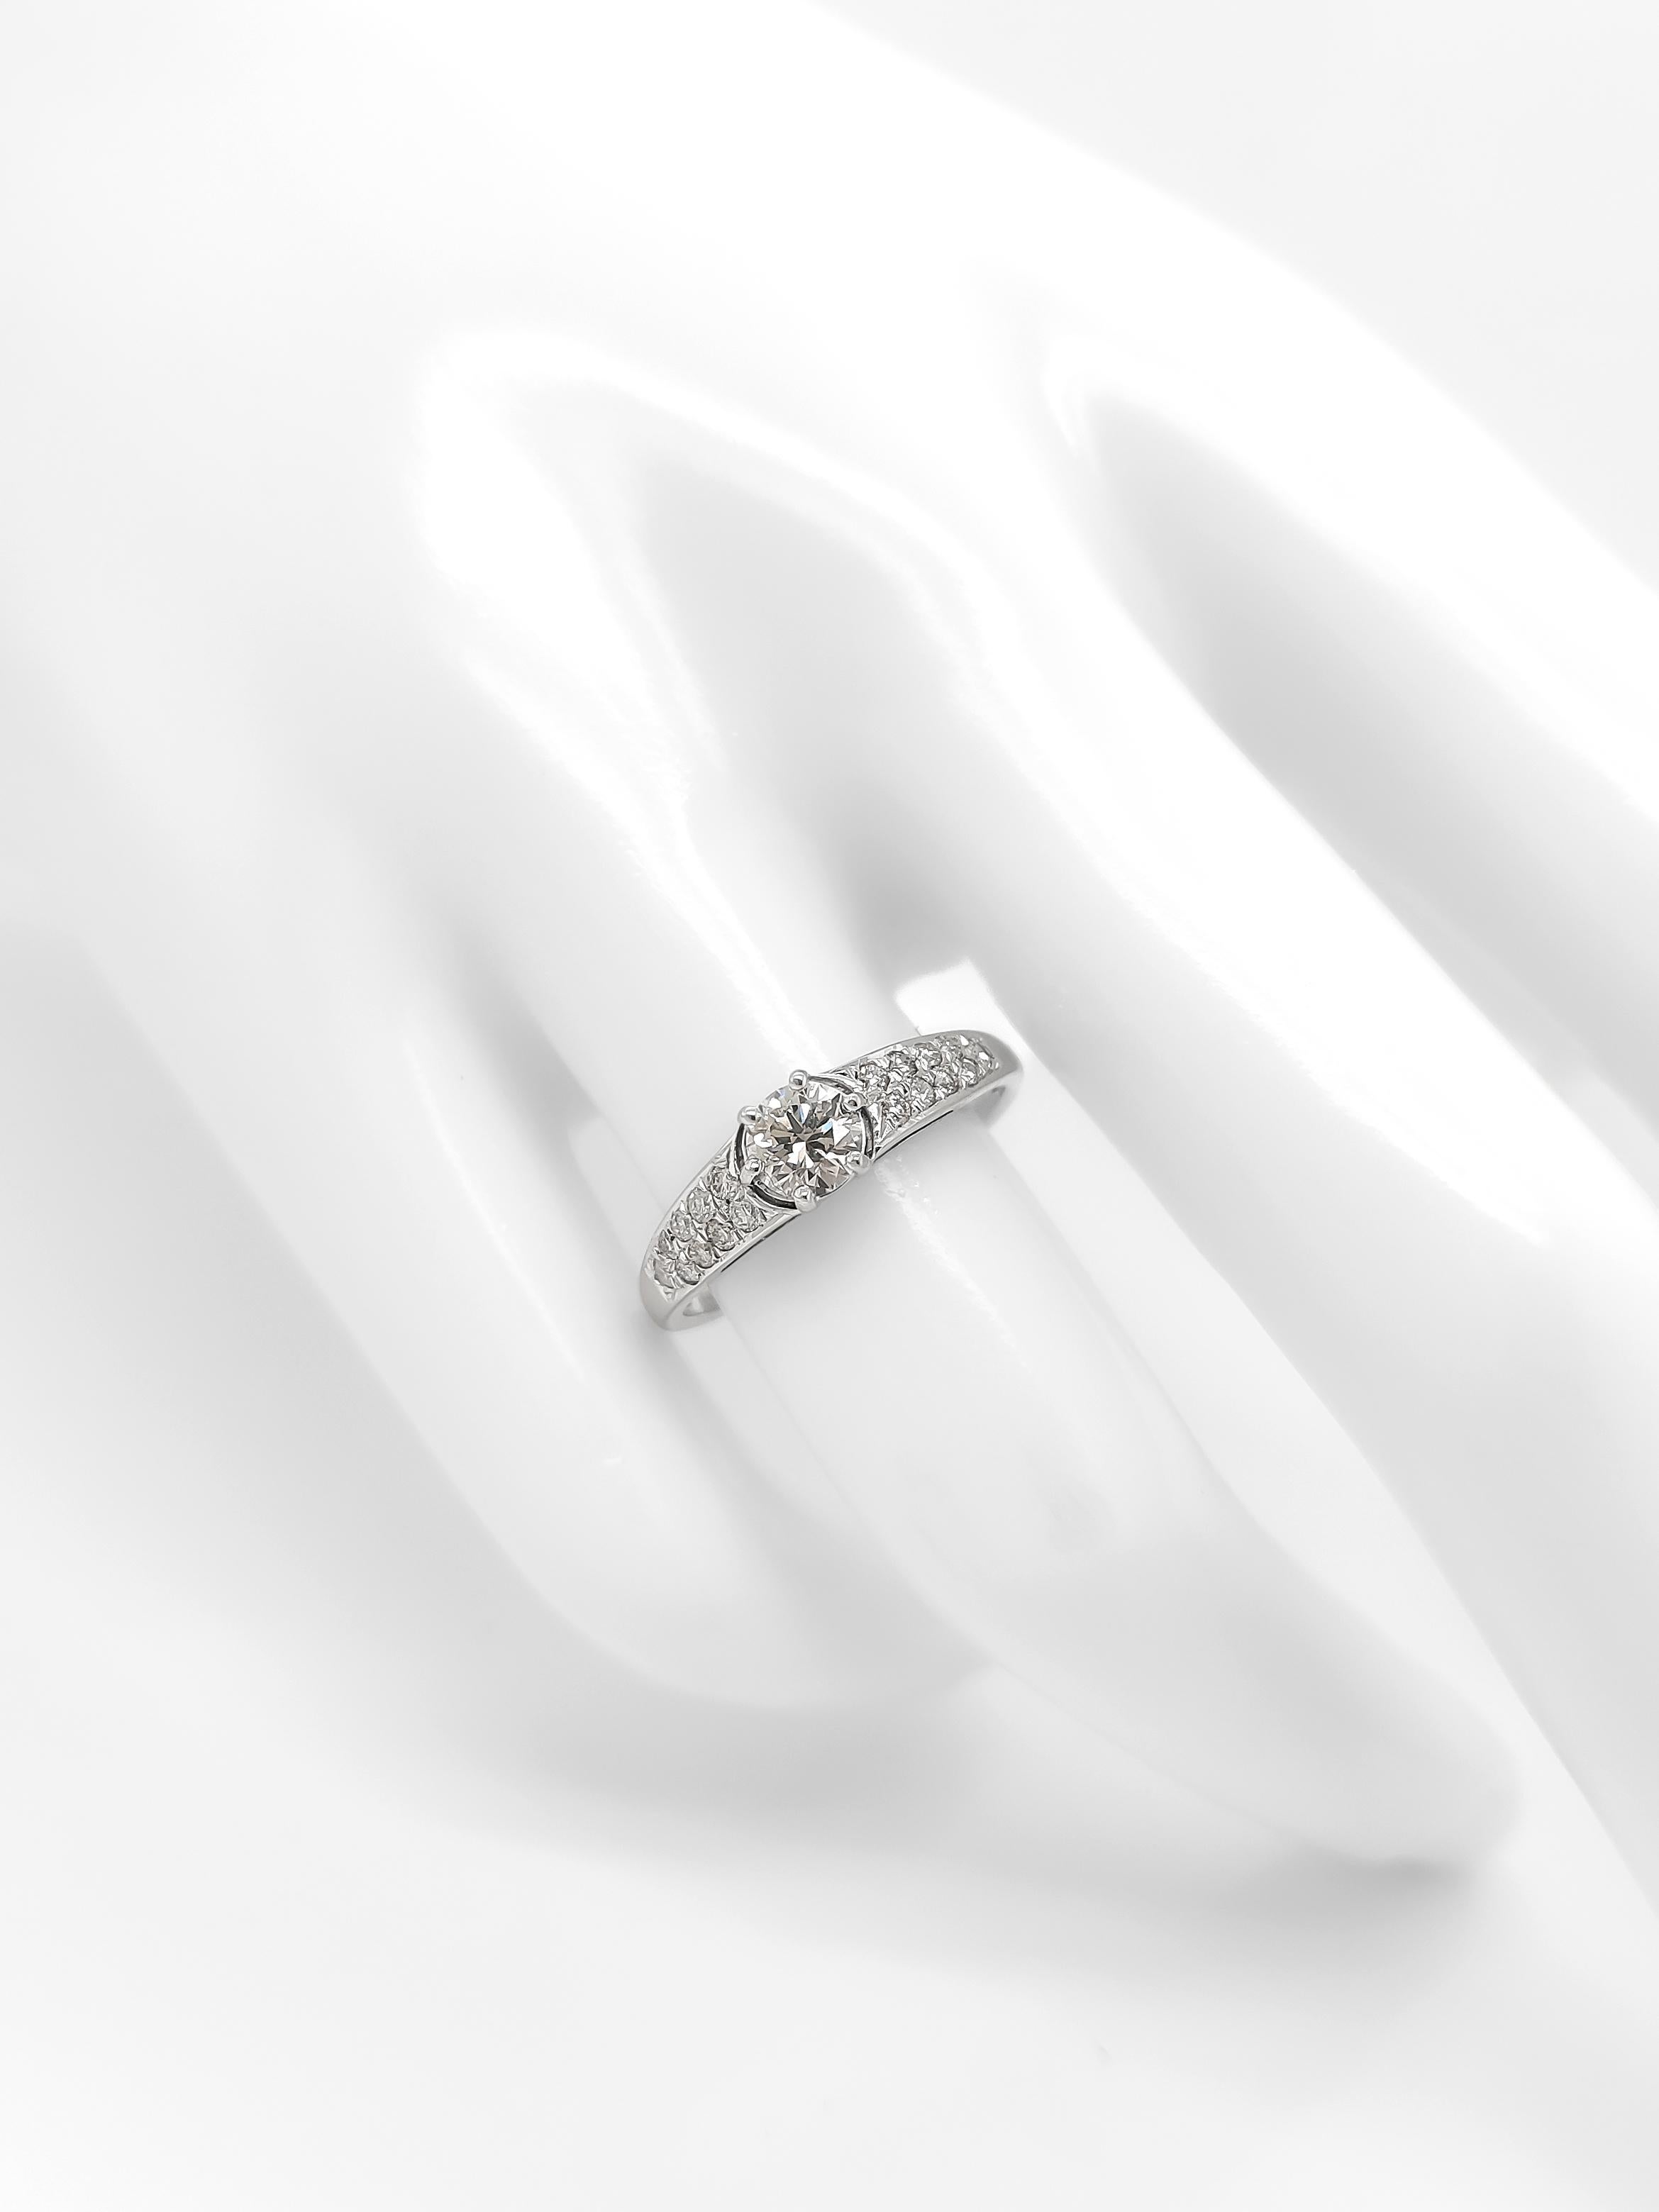 Art Deco NO RESERVE PRICE 0.60CTW Round Diamond Ring 14K White Gold  For Sale